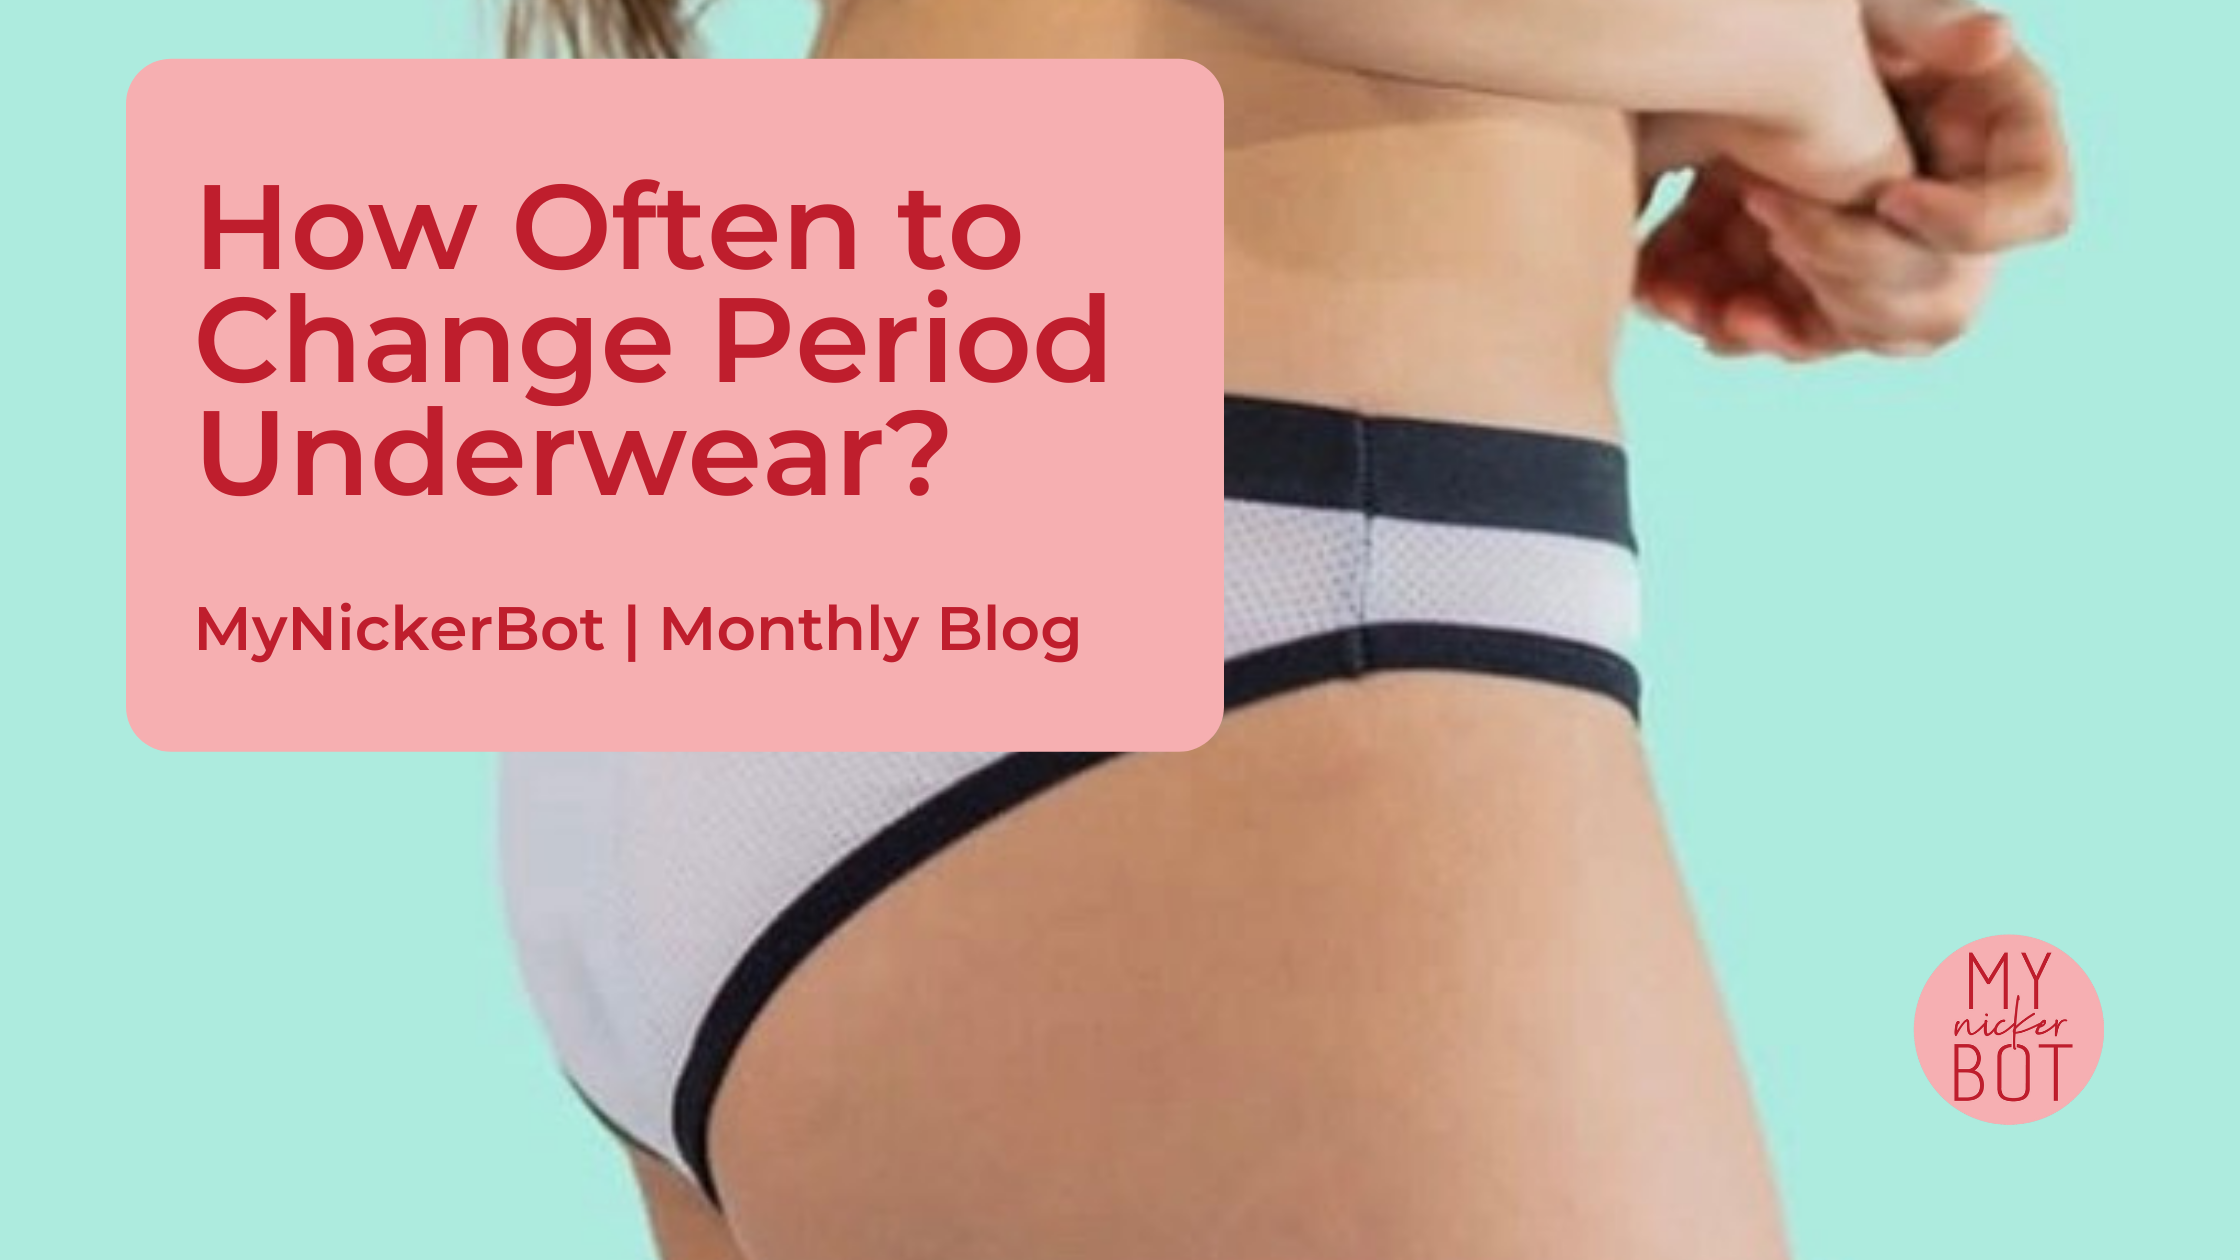 Bonds Bloody Comfy Brief Heavy 14 Period Care Reusable Underwear each